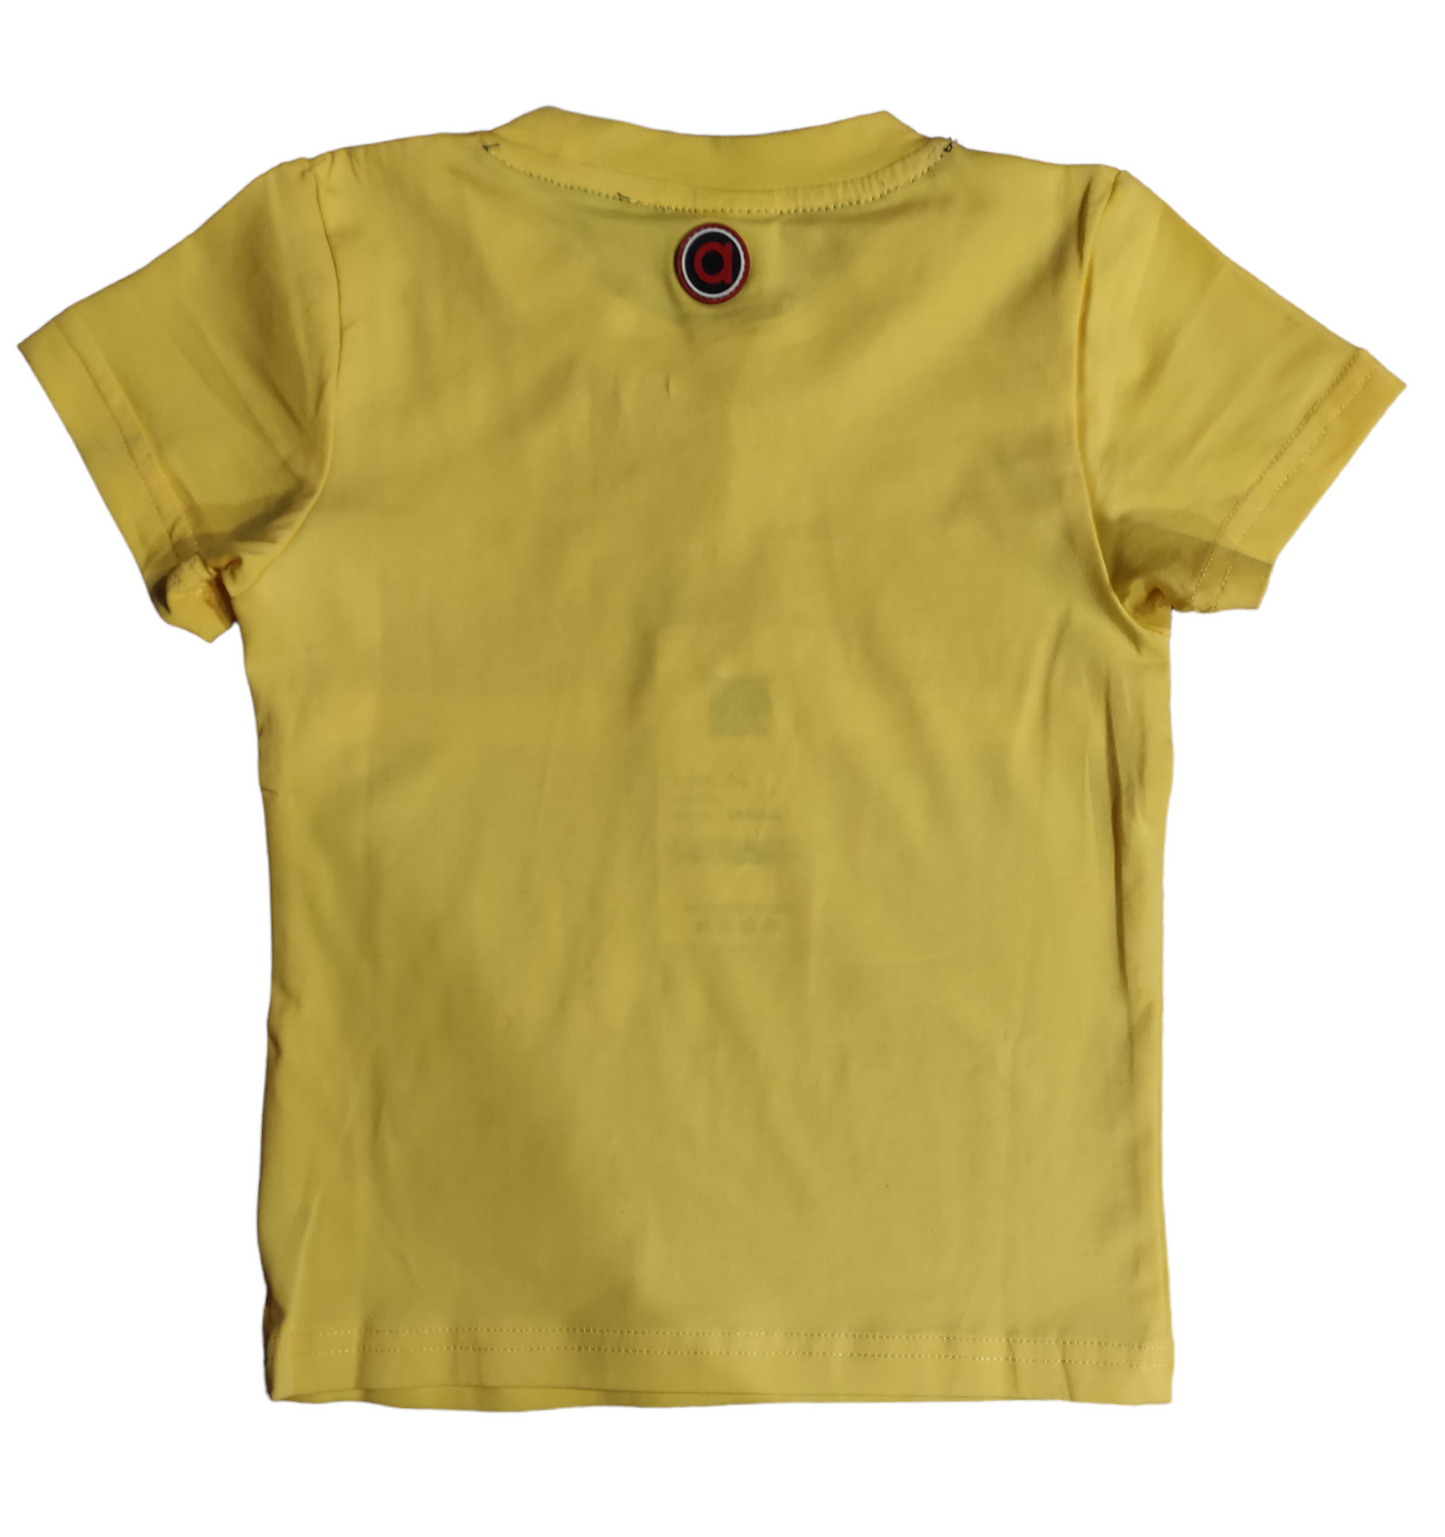 Completo in Cotone T-Shirt Colorata Gialla e Pantaloncino Bambino 6-36 Mesi